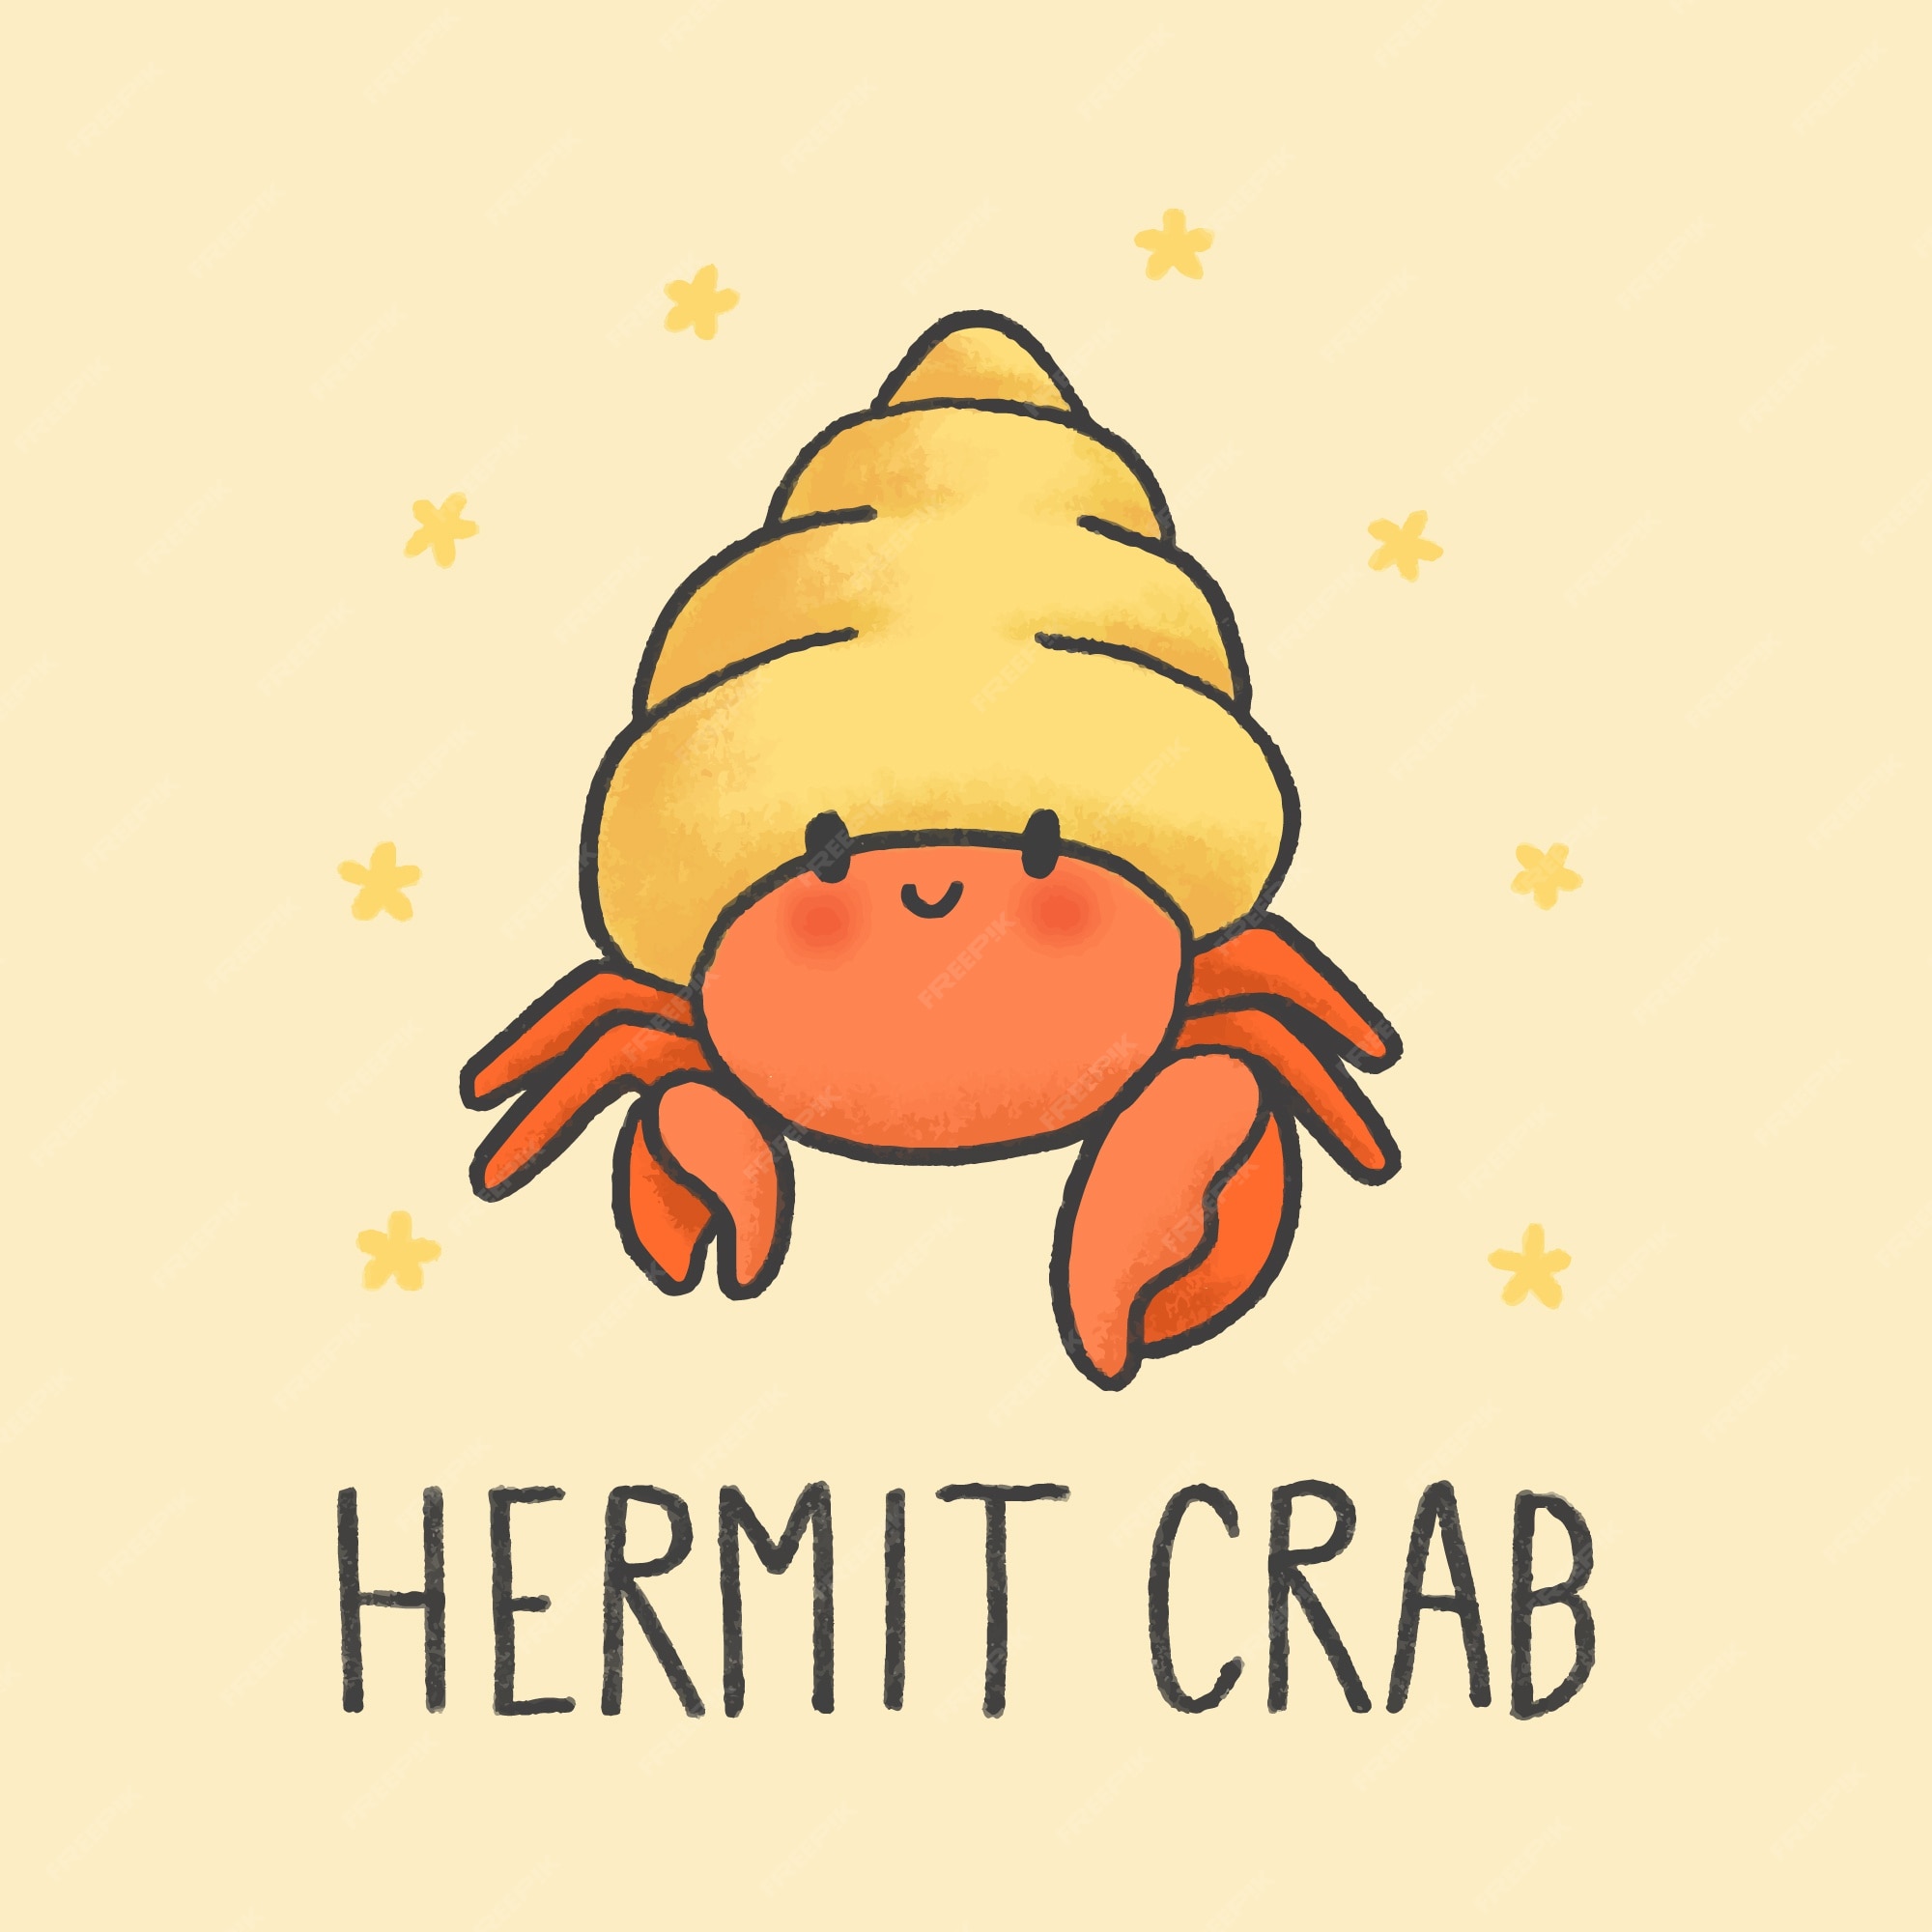 Premium Vector | Cute hermit crab cartoon hand drawn style